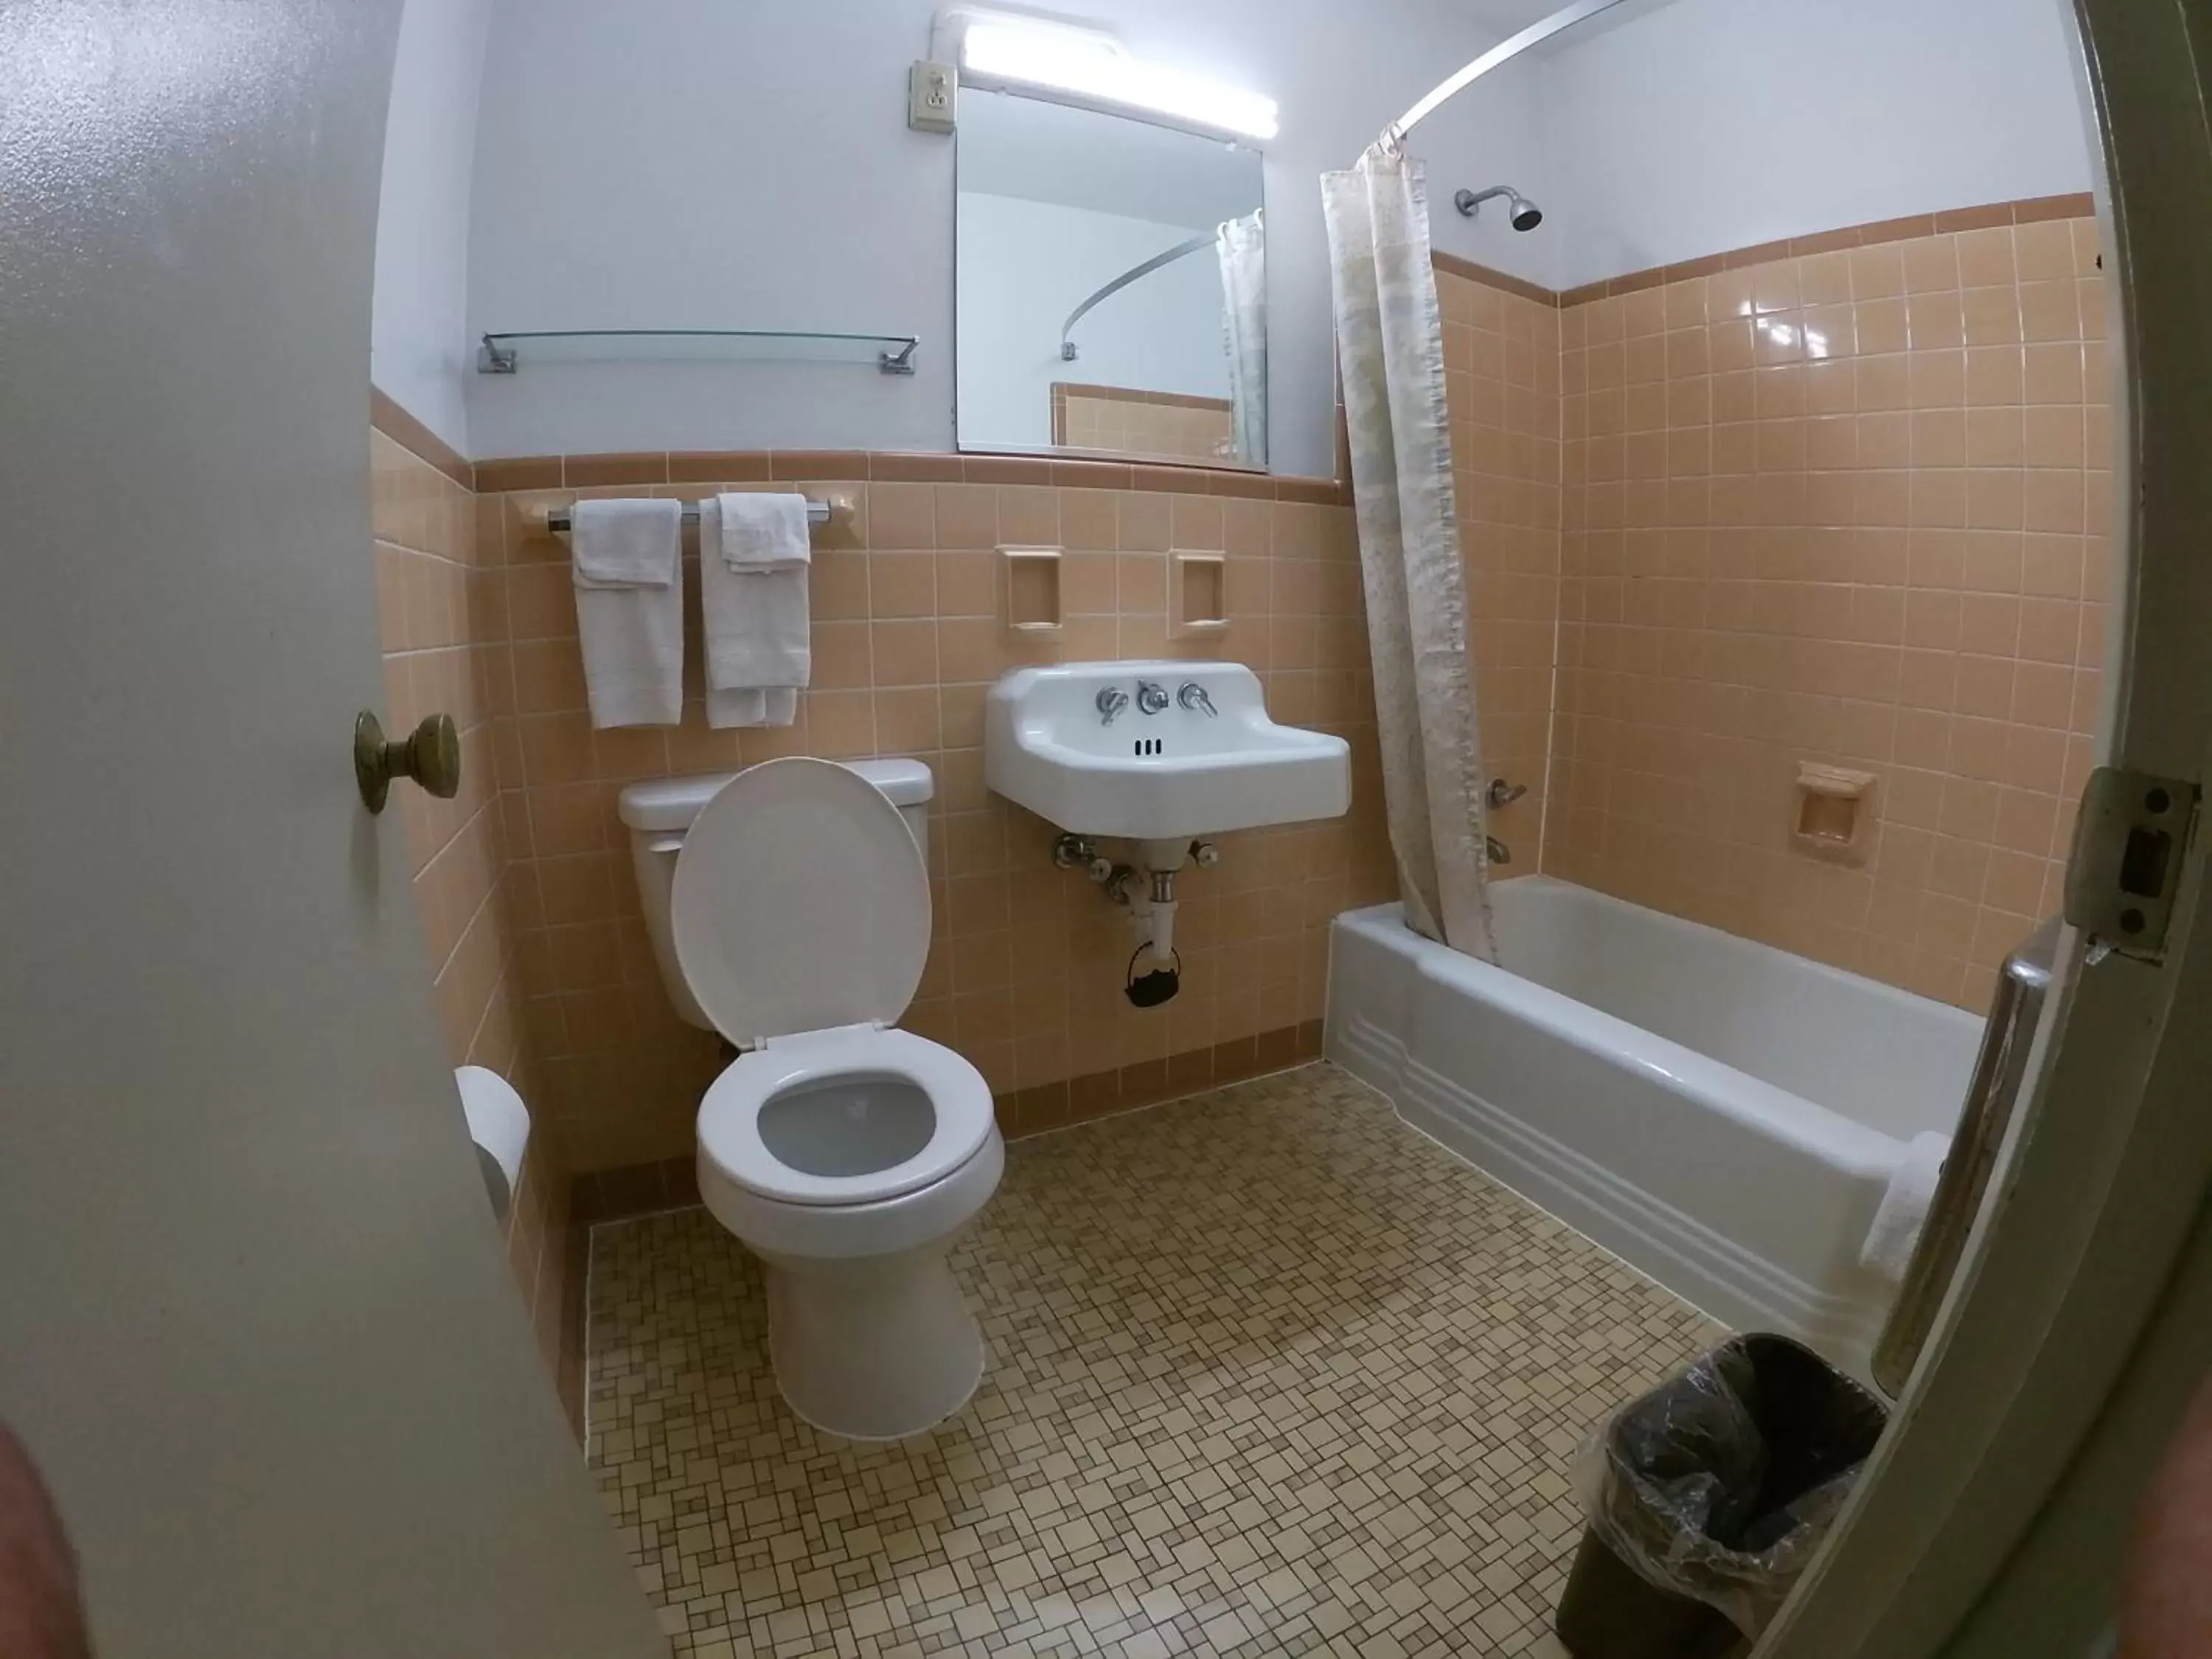 Bathroom in Budget Inn Clearfield PA